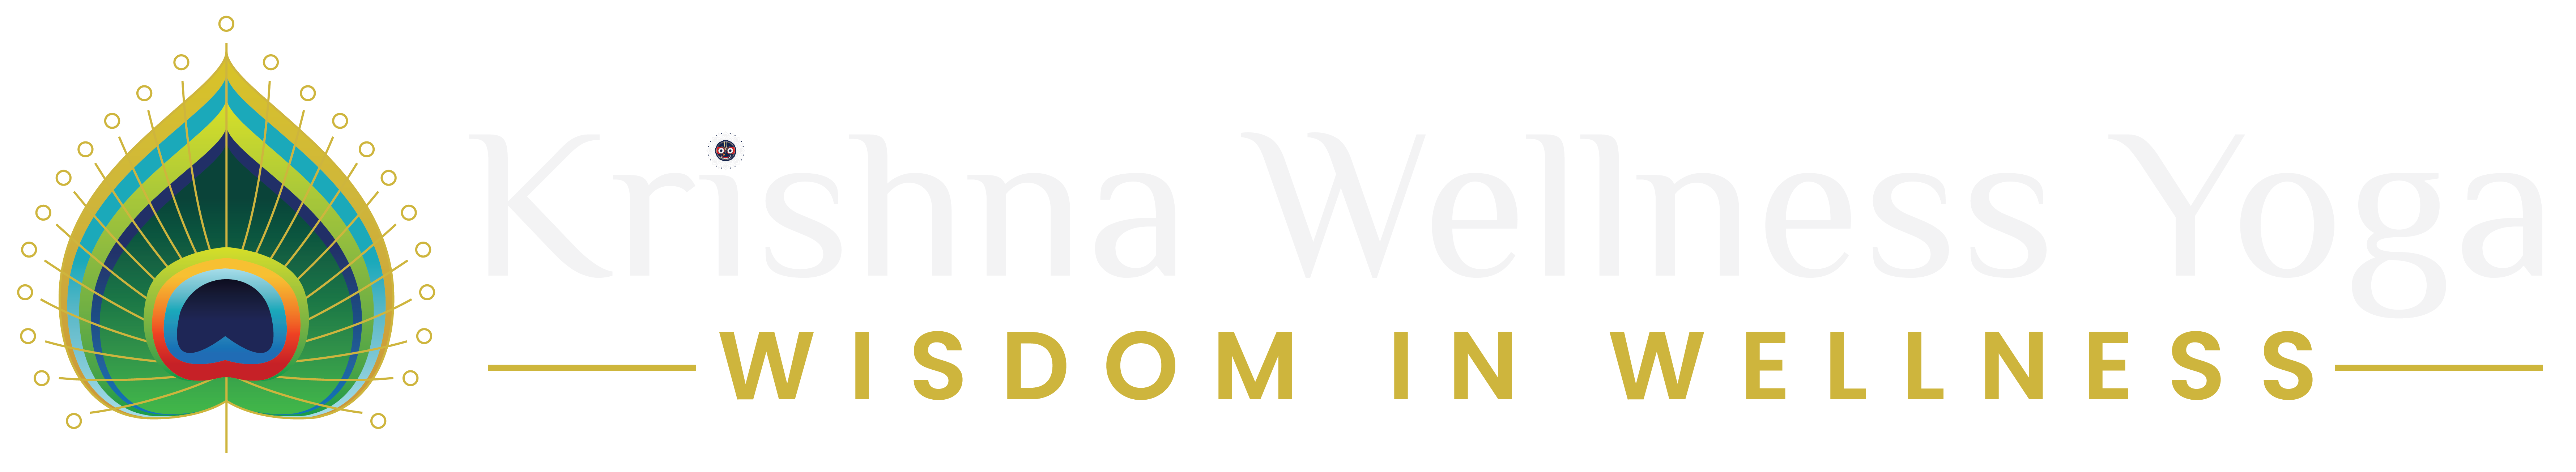 krishna wellness logo